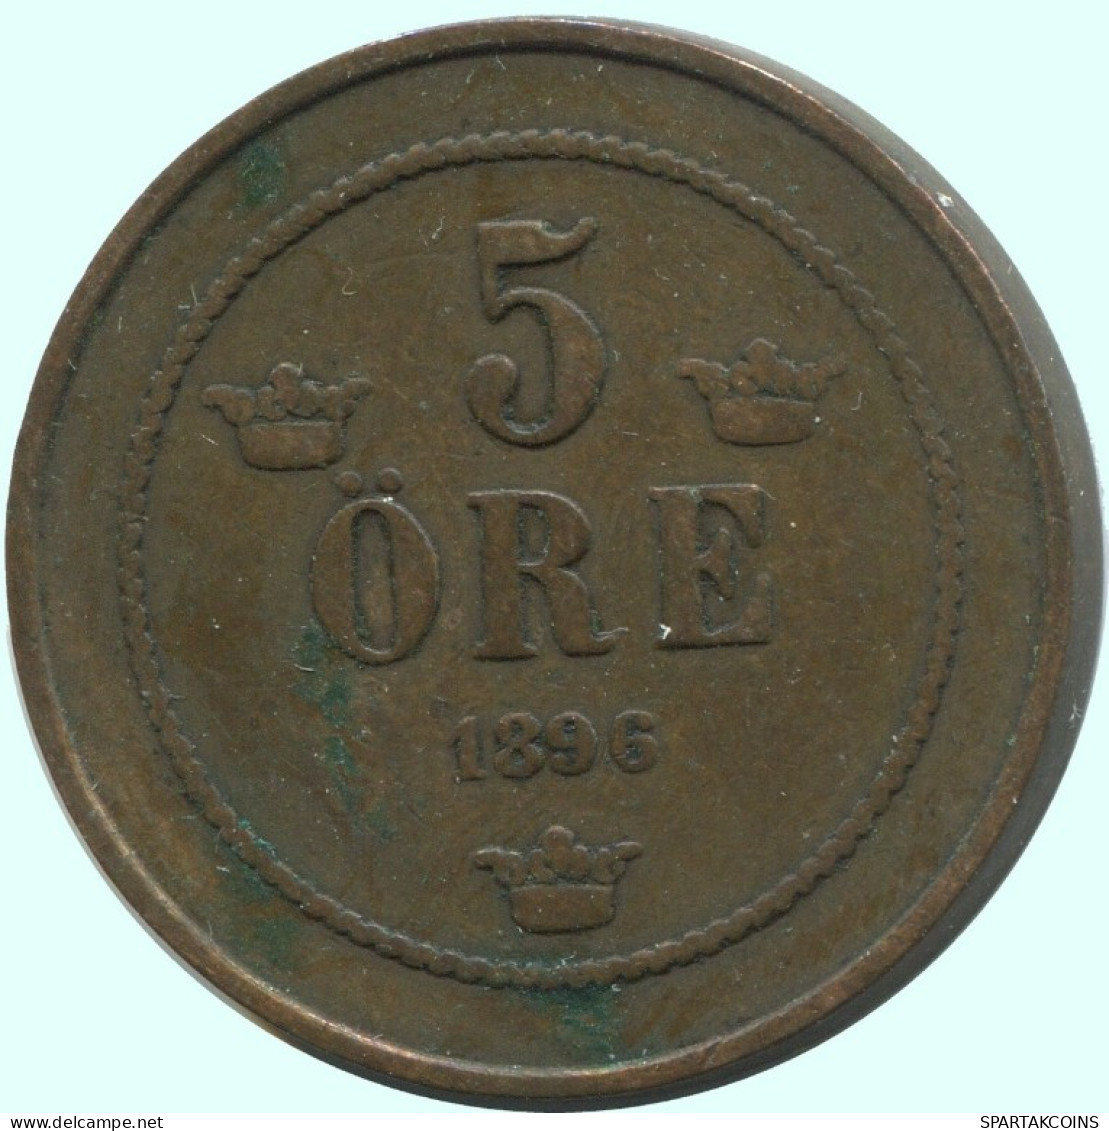 5 ORE 1896 SWEDEN Coin #AC652.2.U.A - Sweden